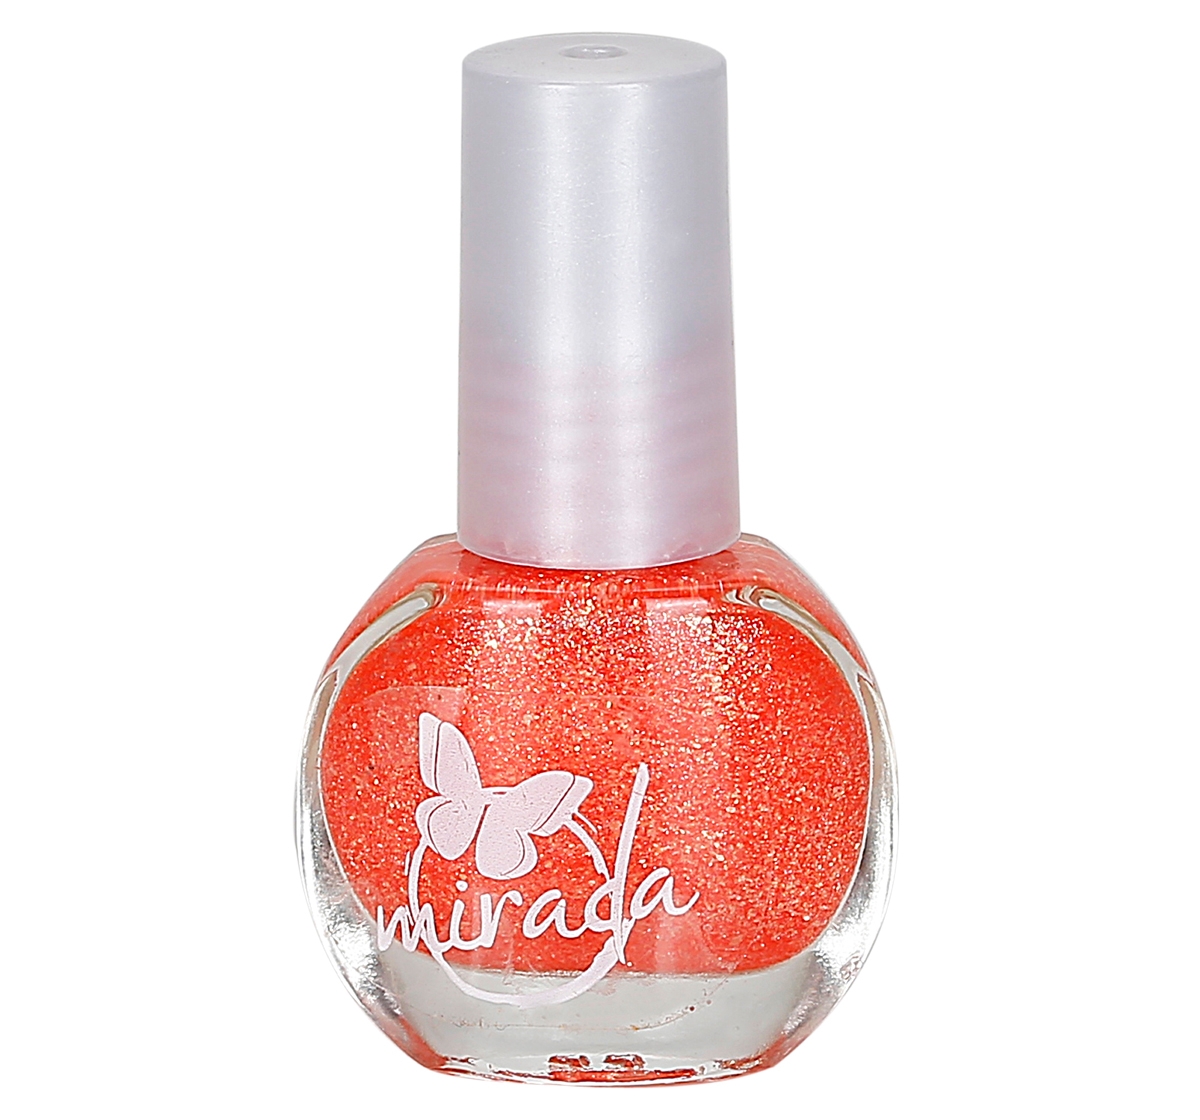 Mirada 3.8Ml Nail Polish Glitterd for kids 3Y+, Multicolour